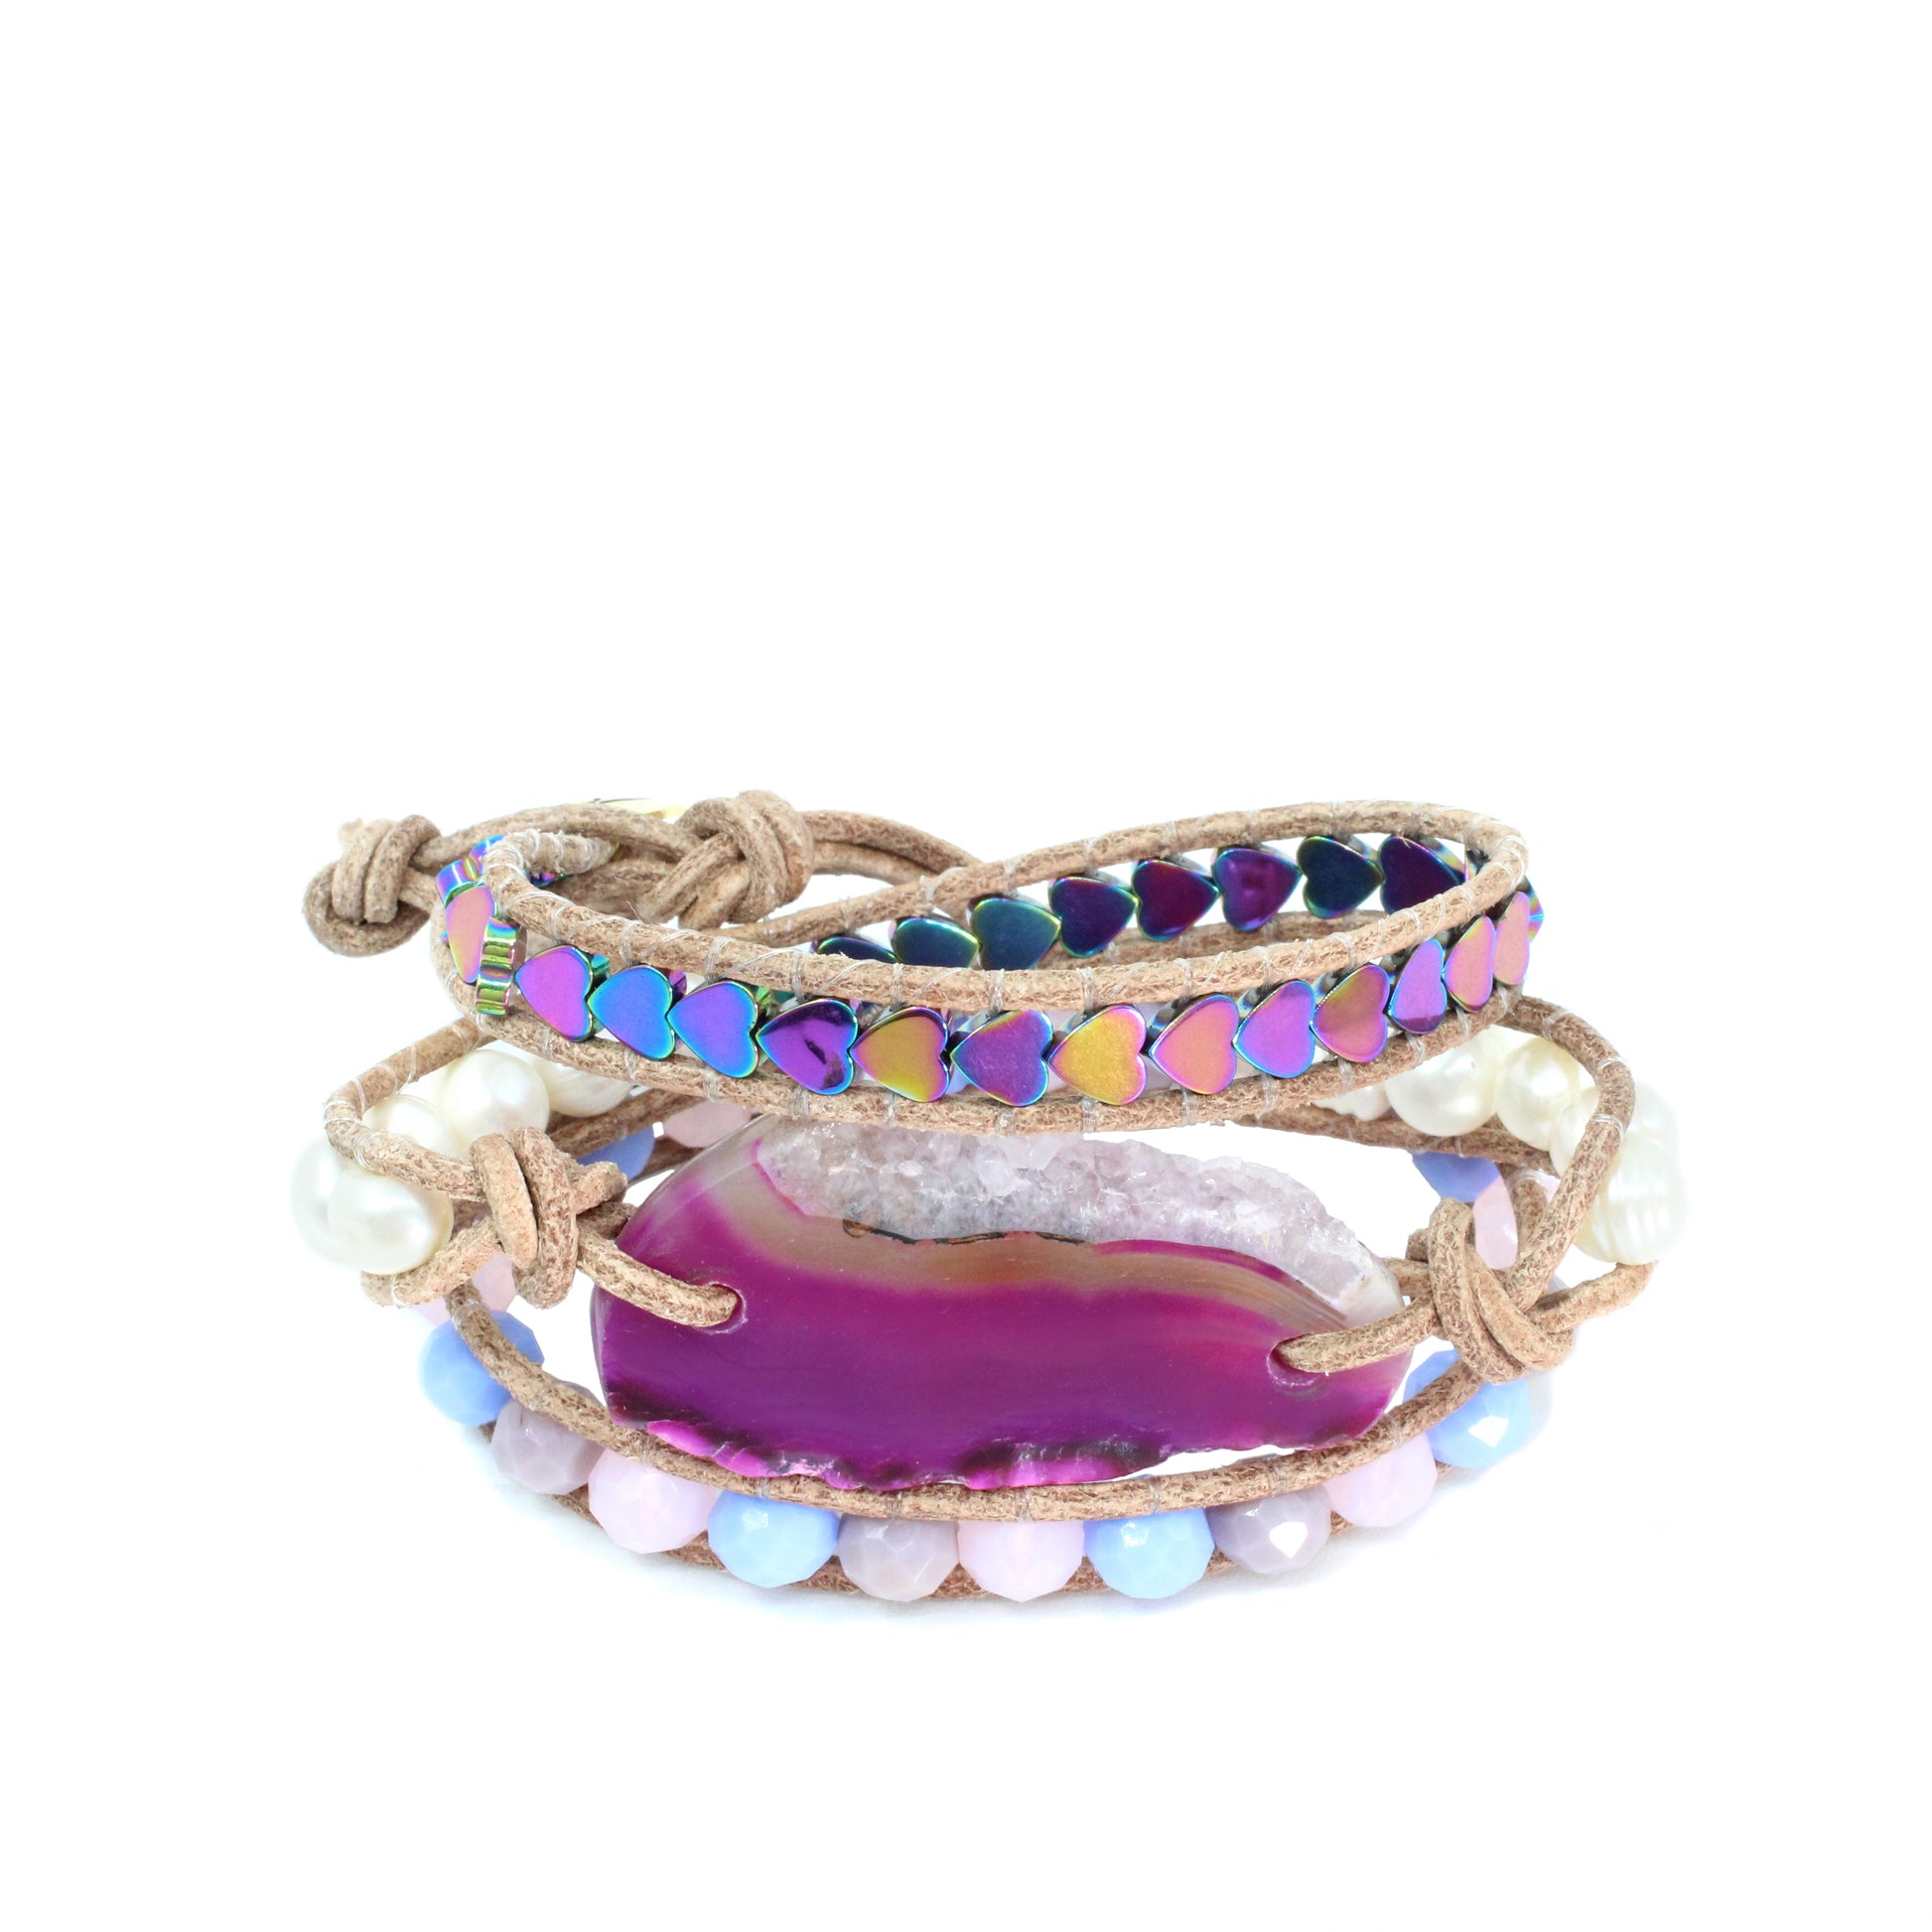 Pulsera Paraiba rosada piedra agata perla cristal tejida ajustable para mujer baño de oro enchapado 24k  corazones artesanal  - Glowa